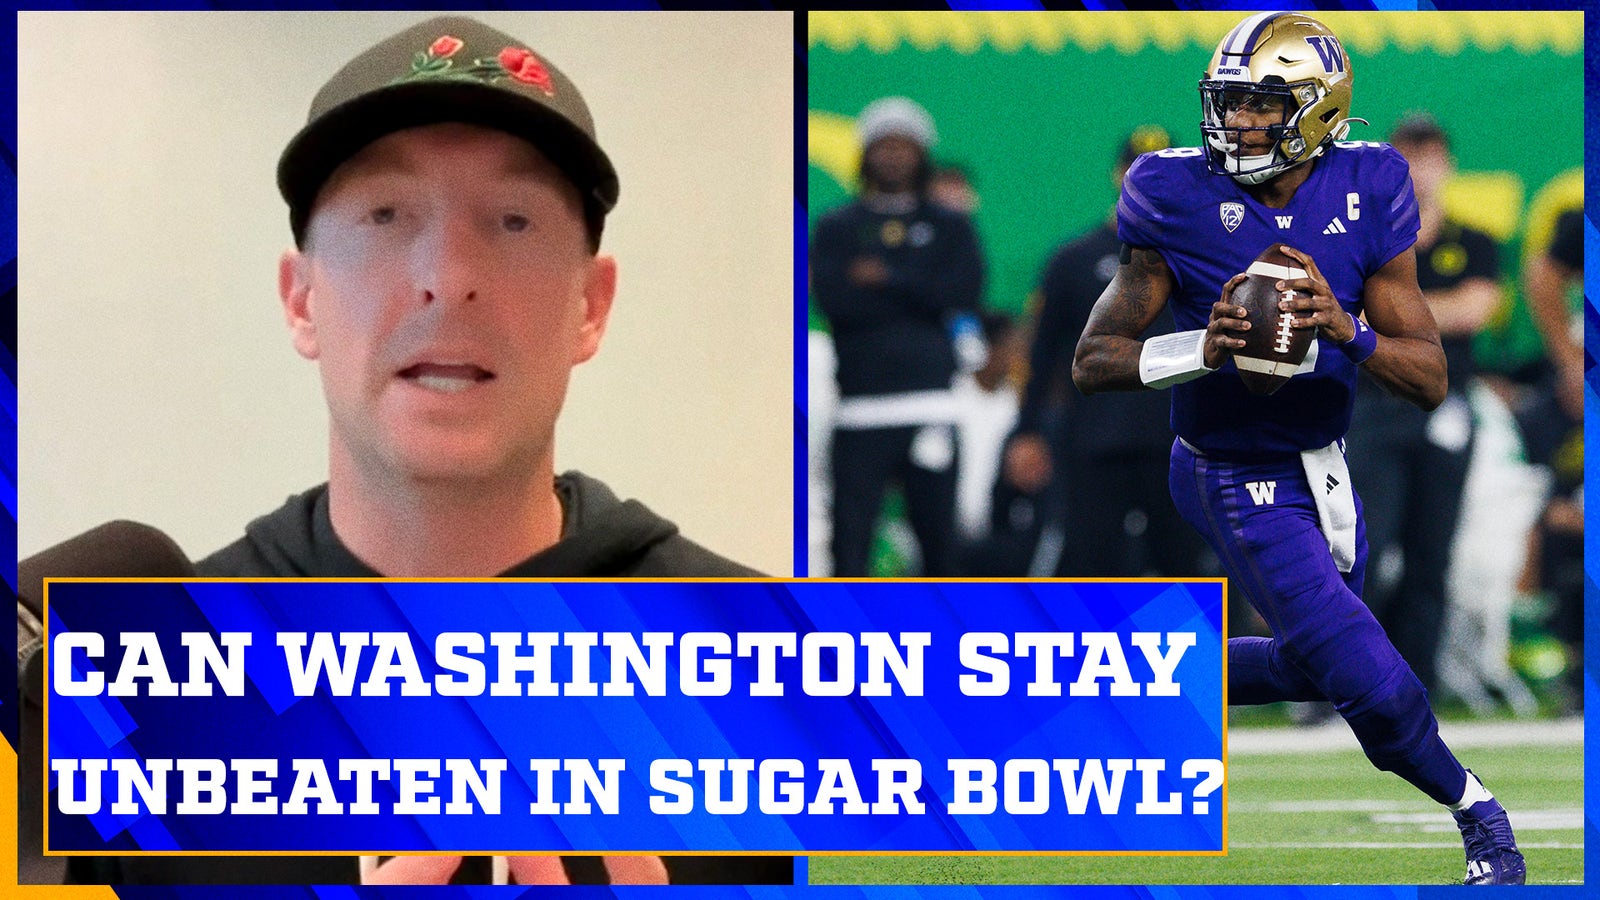 Sugar Bowl Preview: Will Washington's passing game doom Texas?